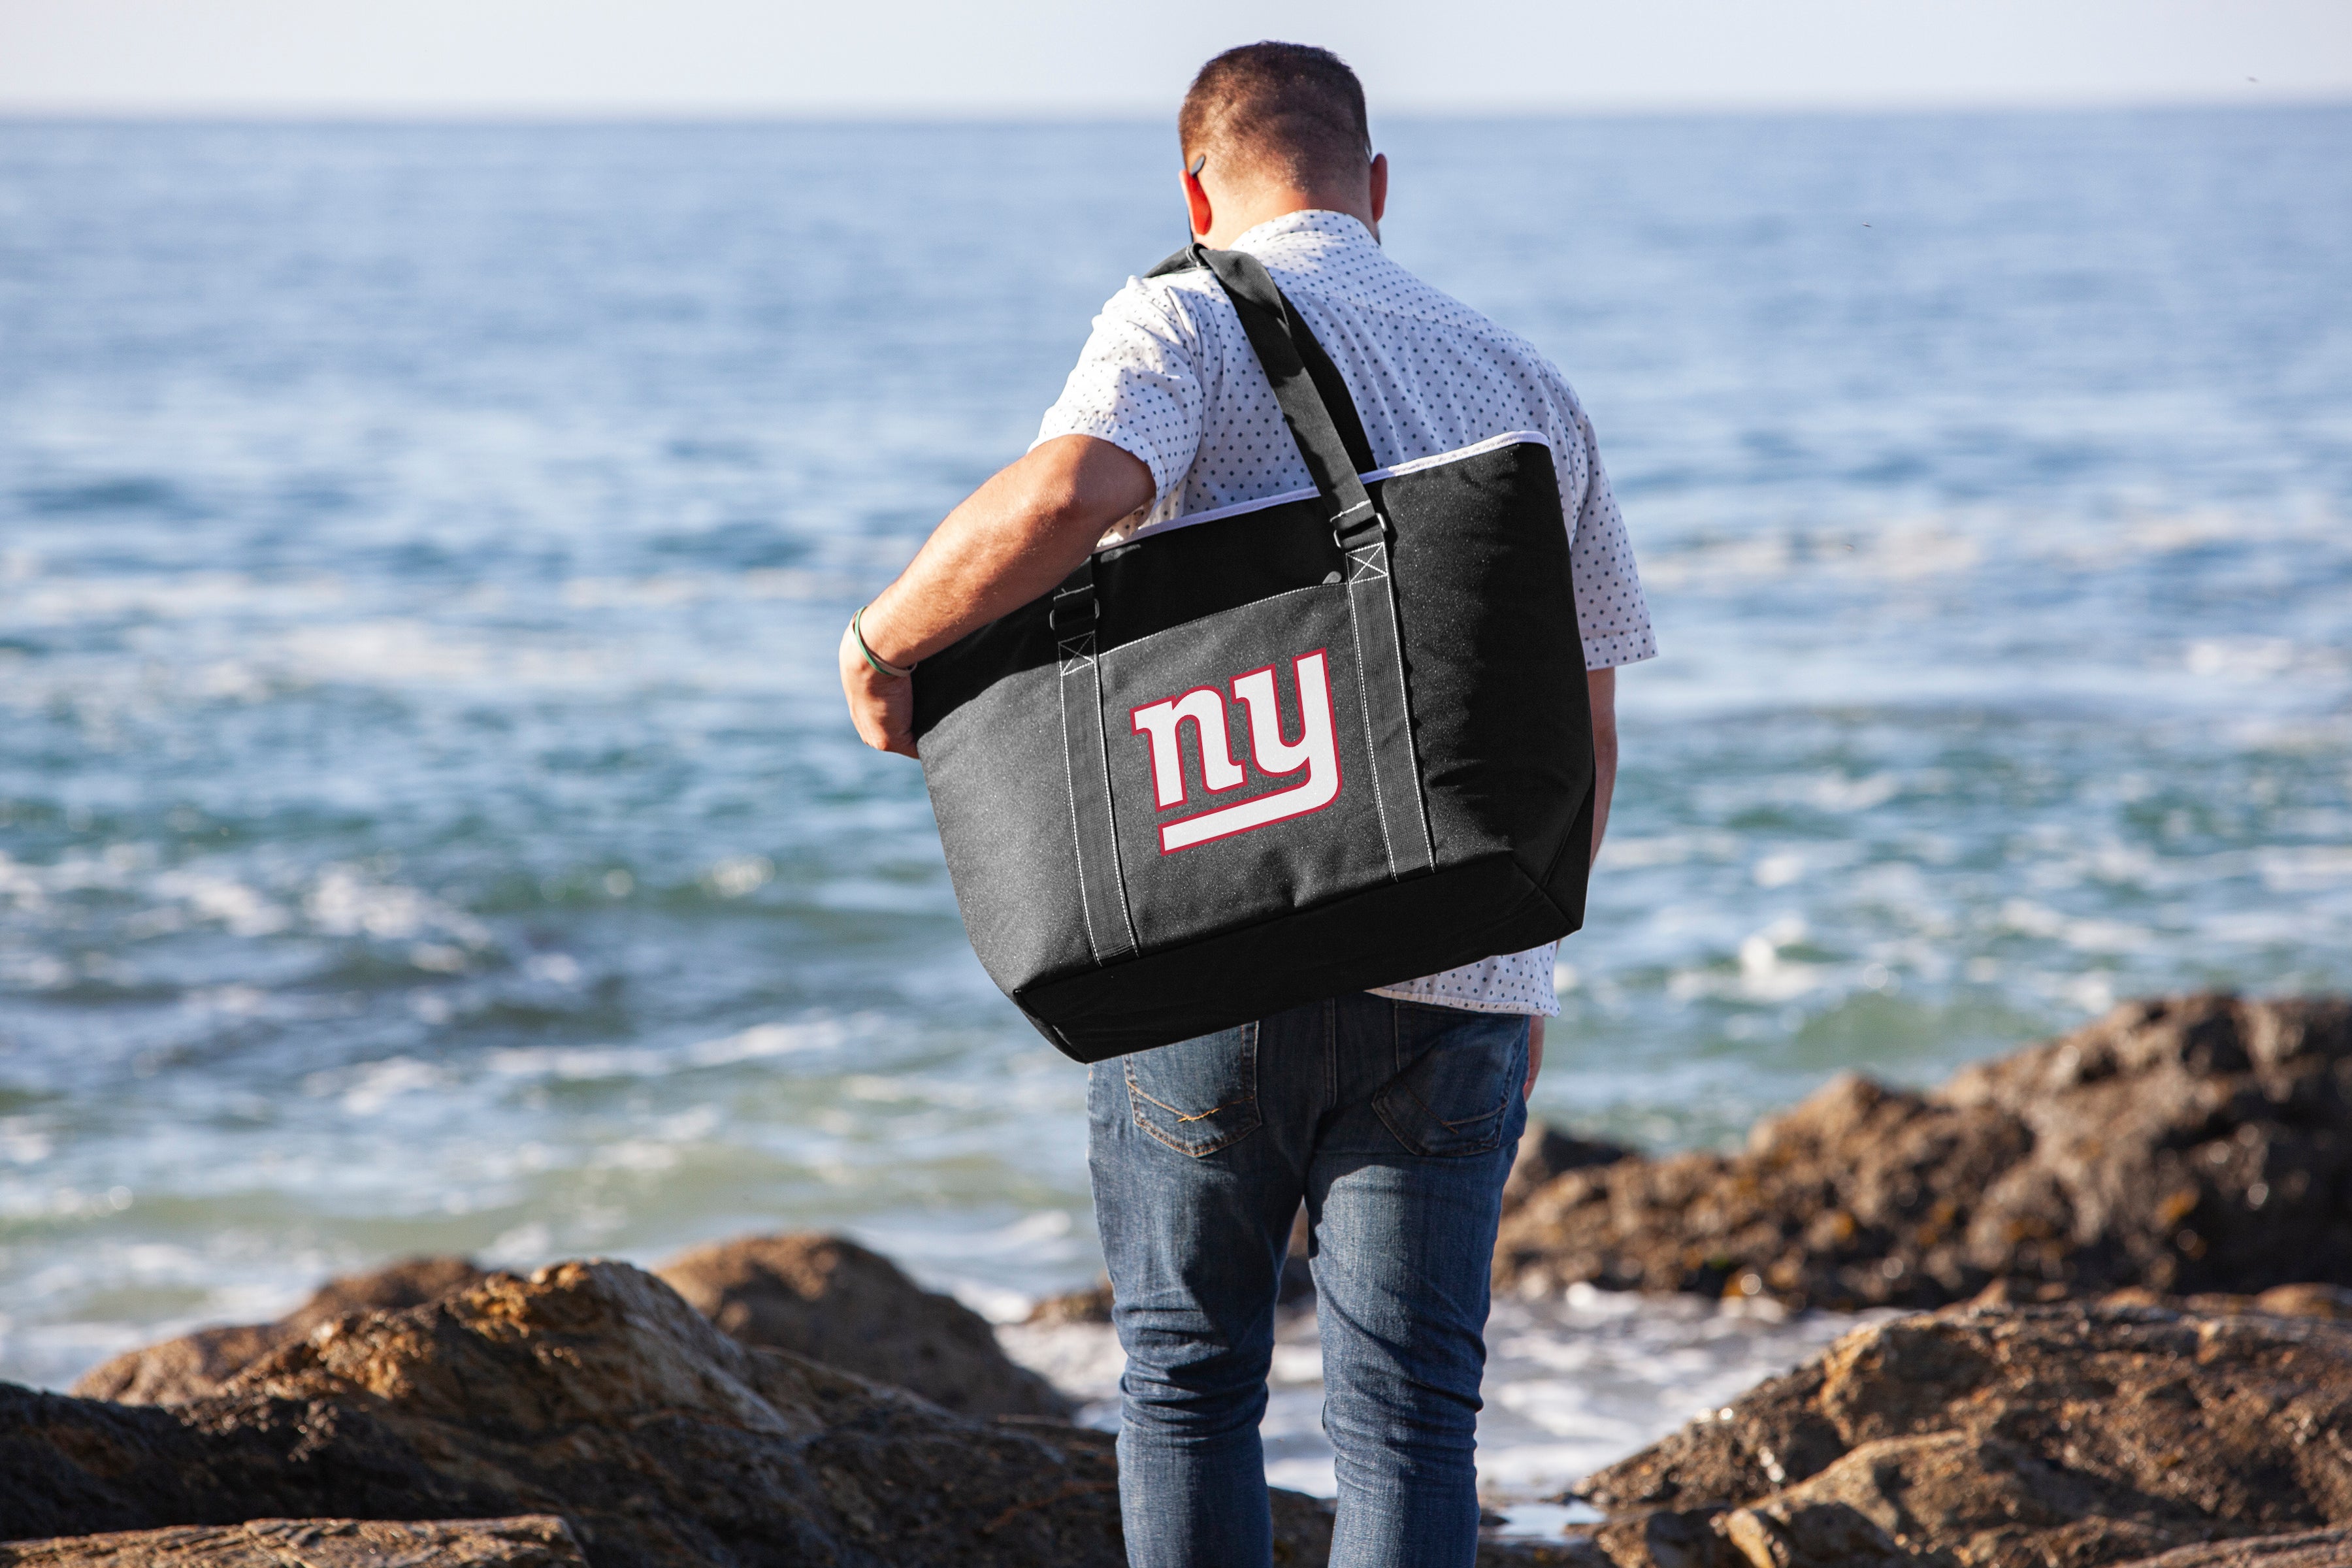 New York Giants - Tahoe XL Cooler Tote Bag